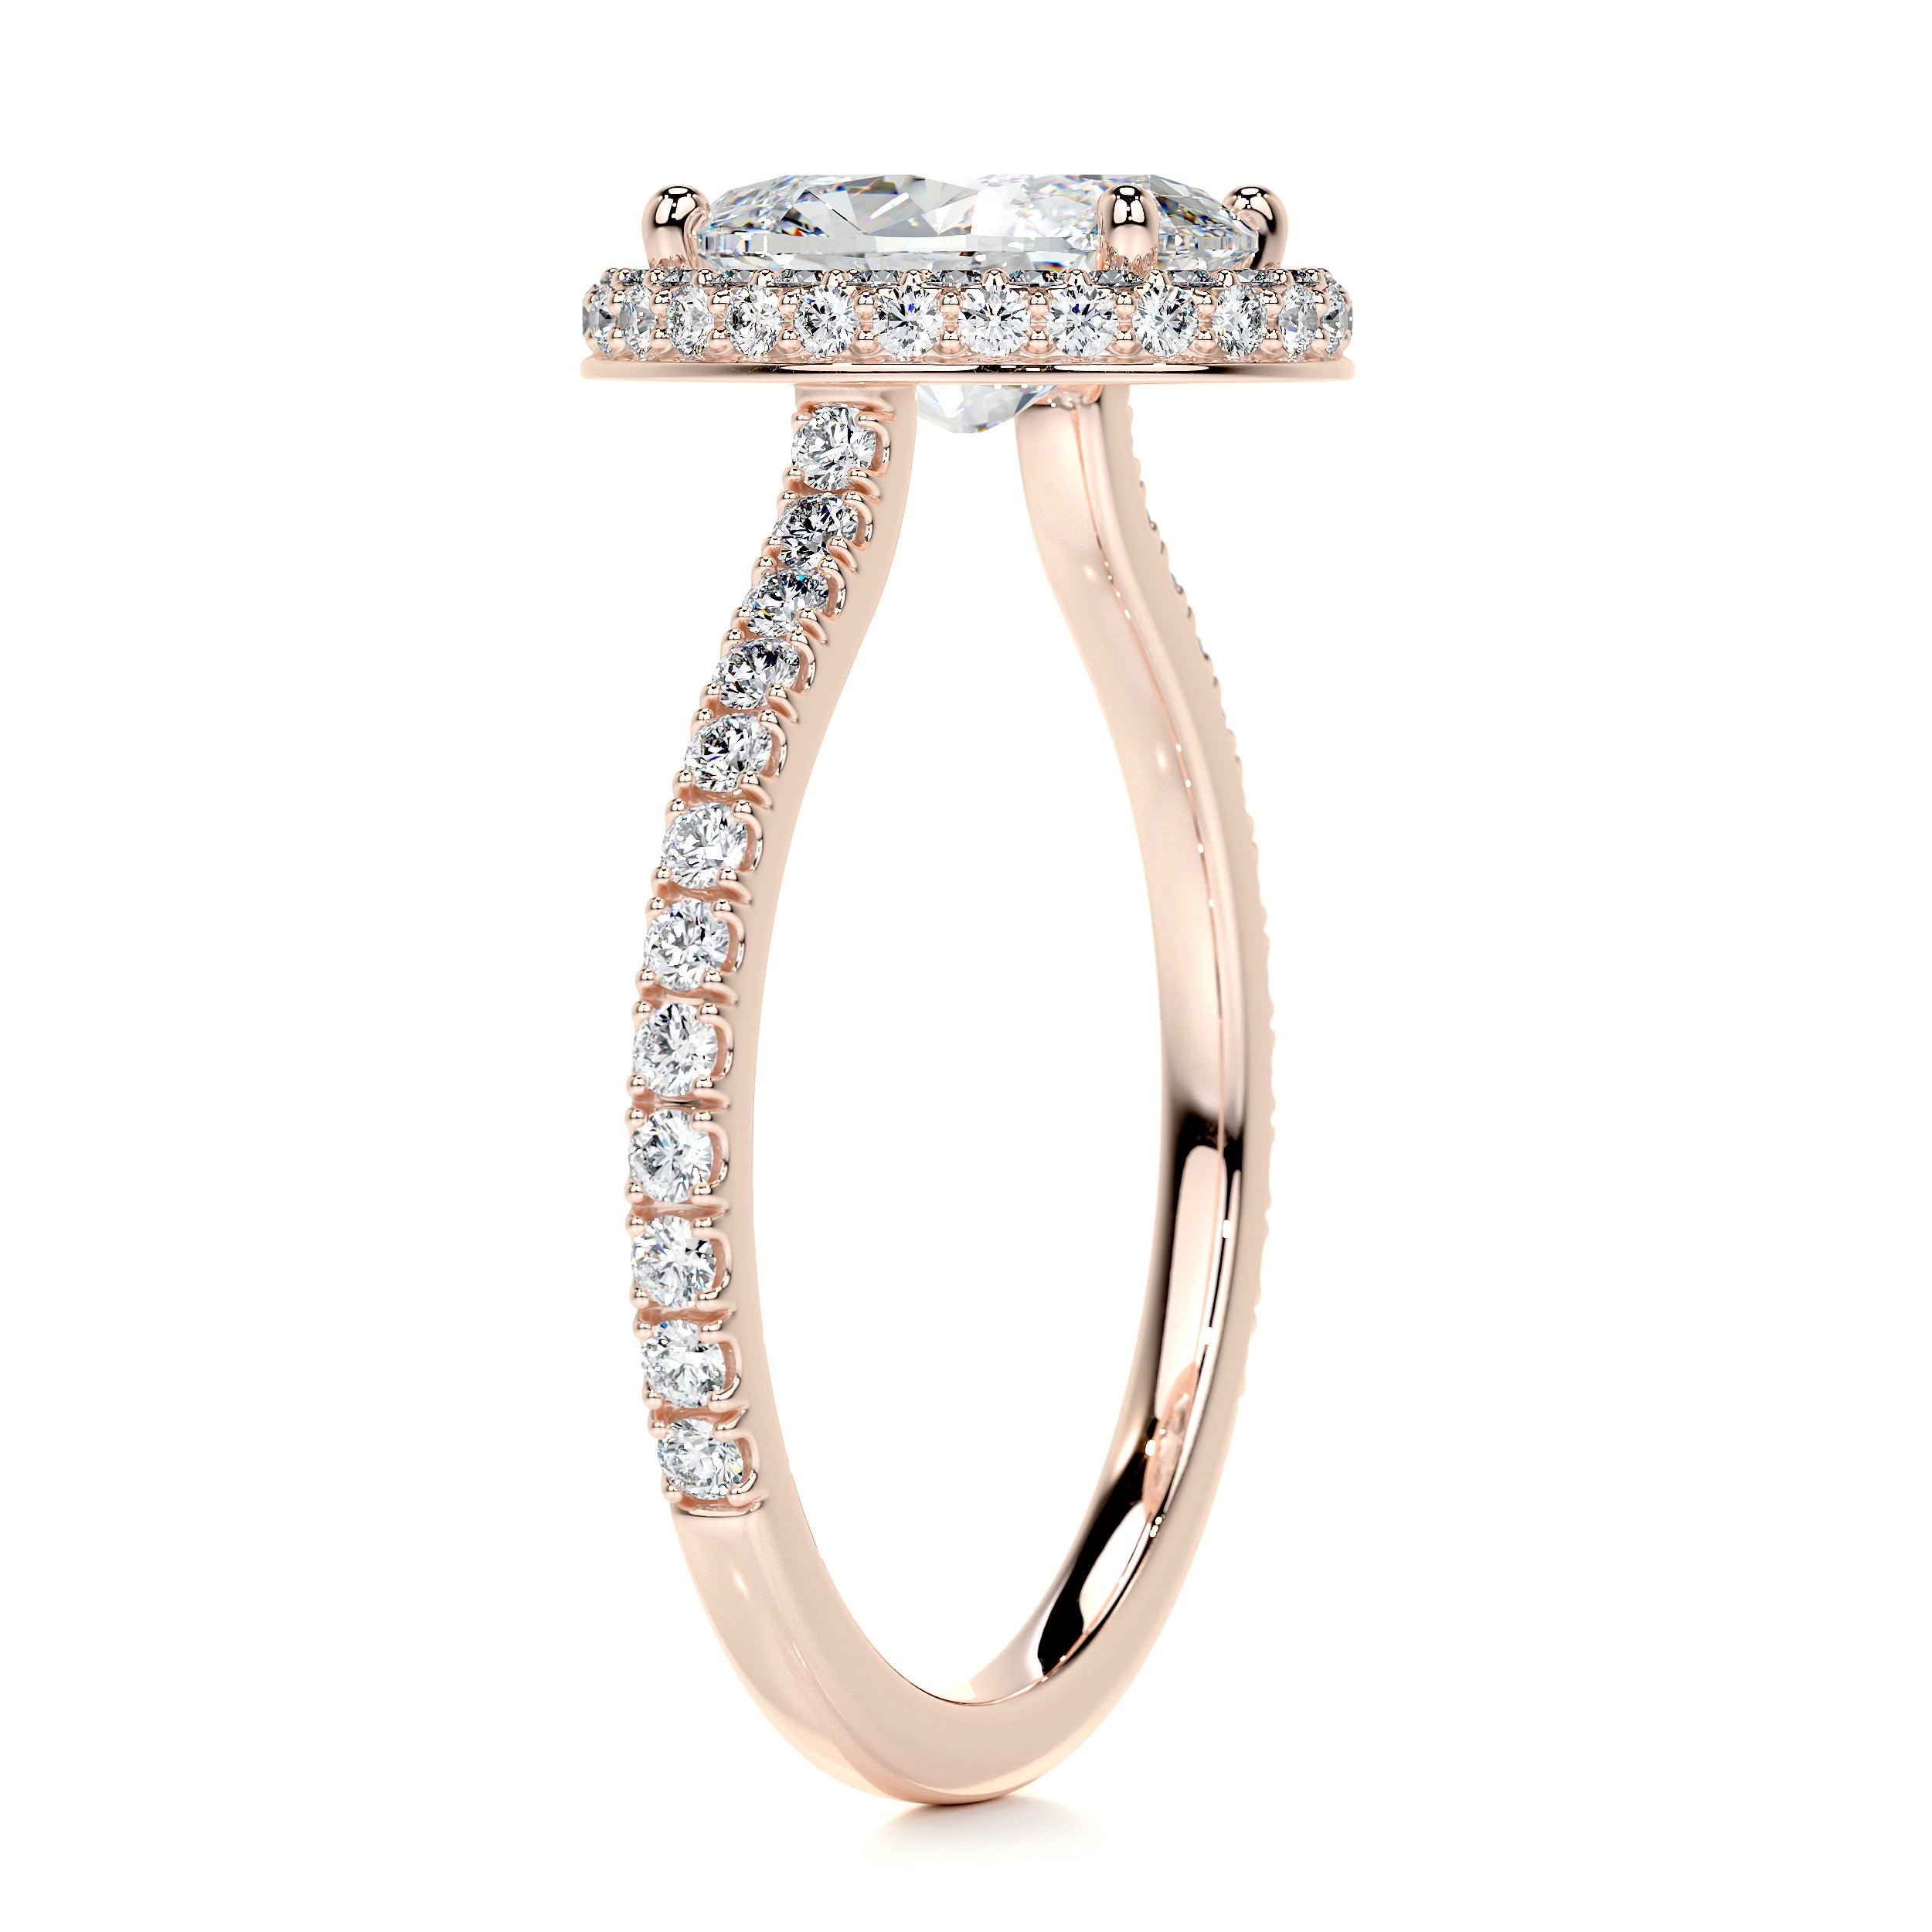 Parker Diamond Engagement Ring   (2.40 Carat) -14K Rose Gold